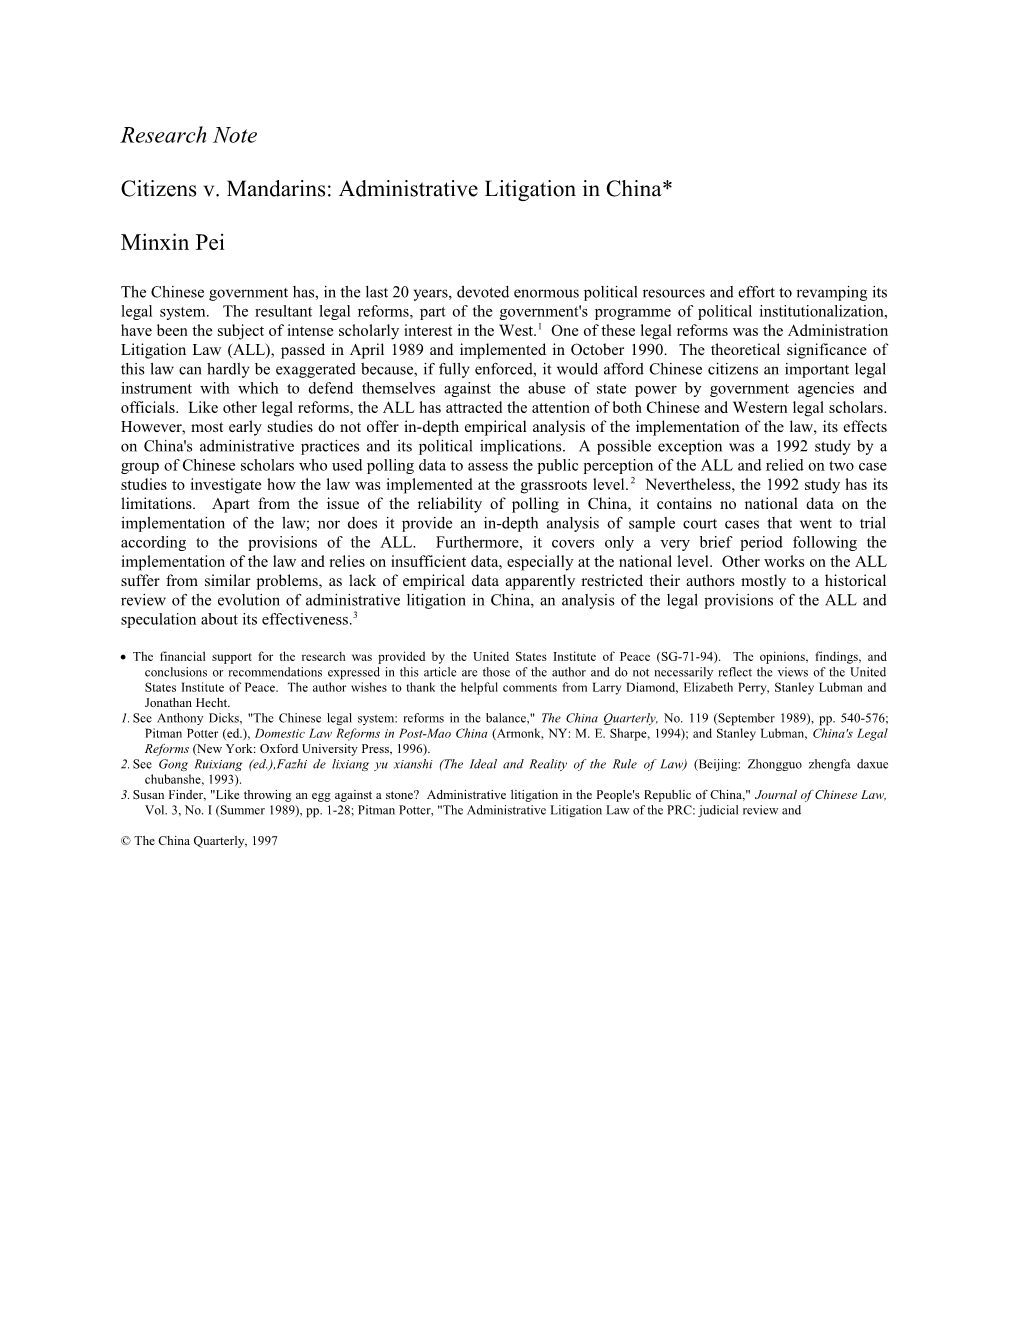 Citizens V. Mandarins: Administrative Litigation in China*